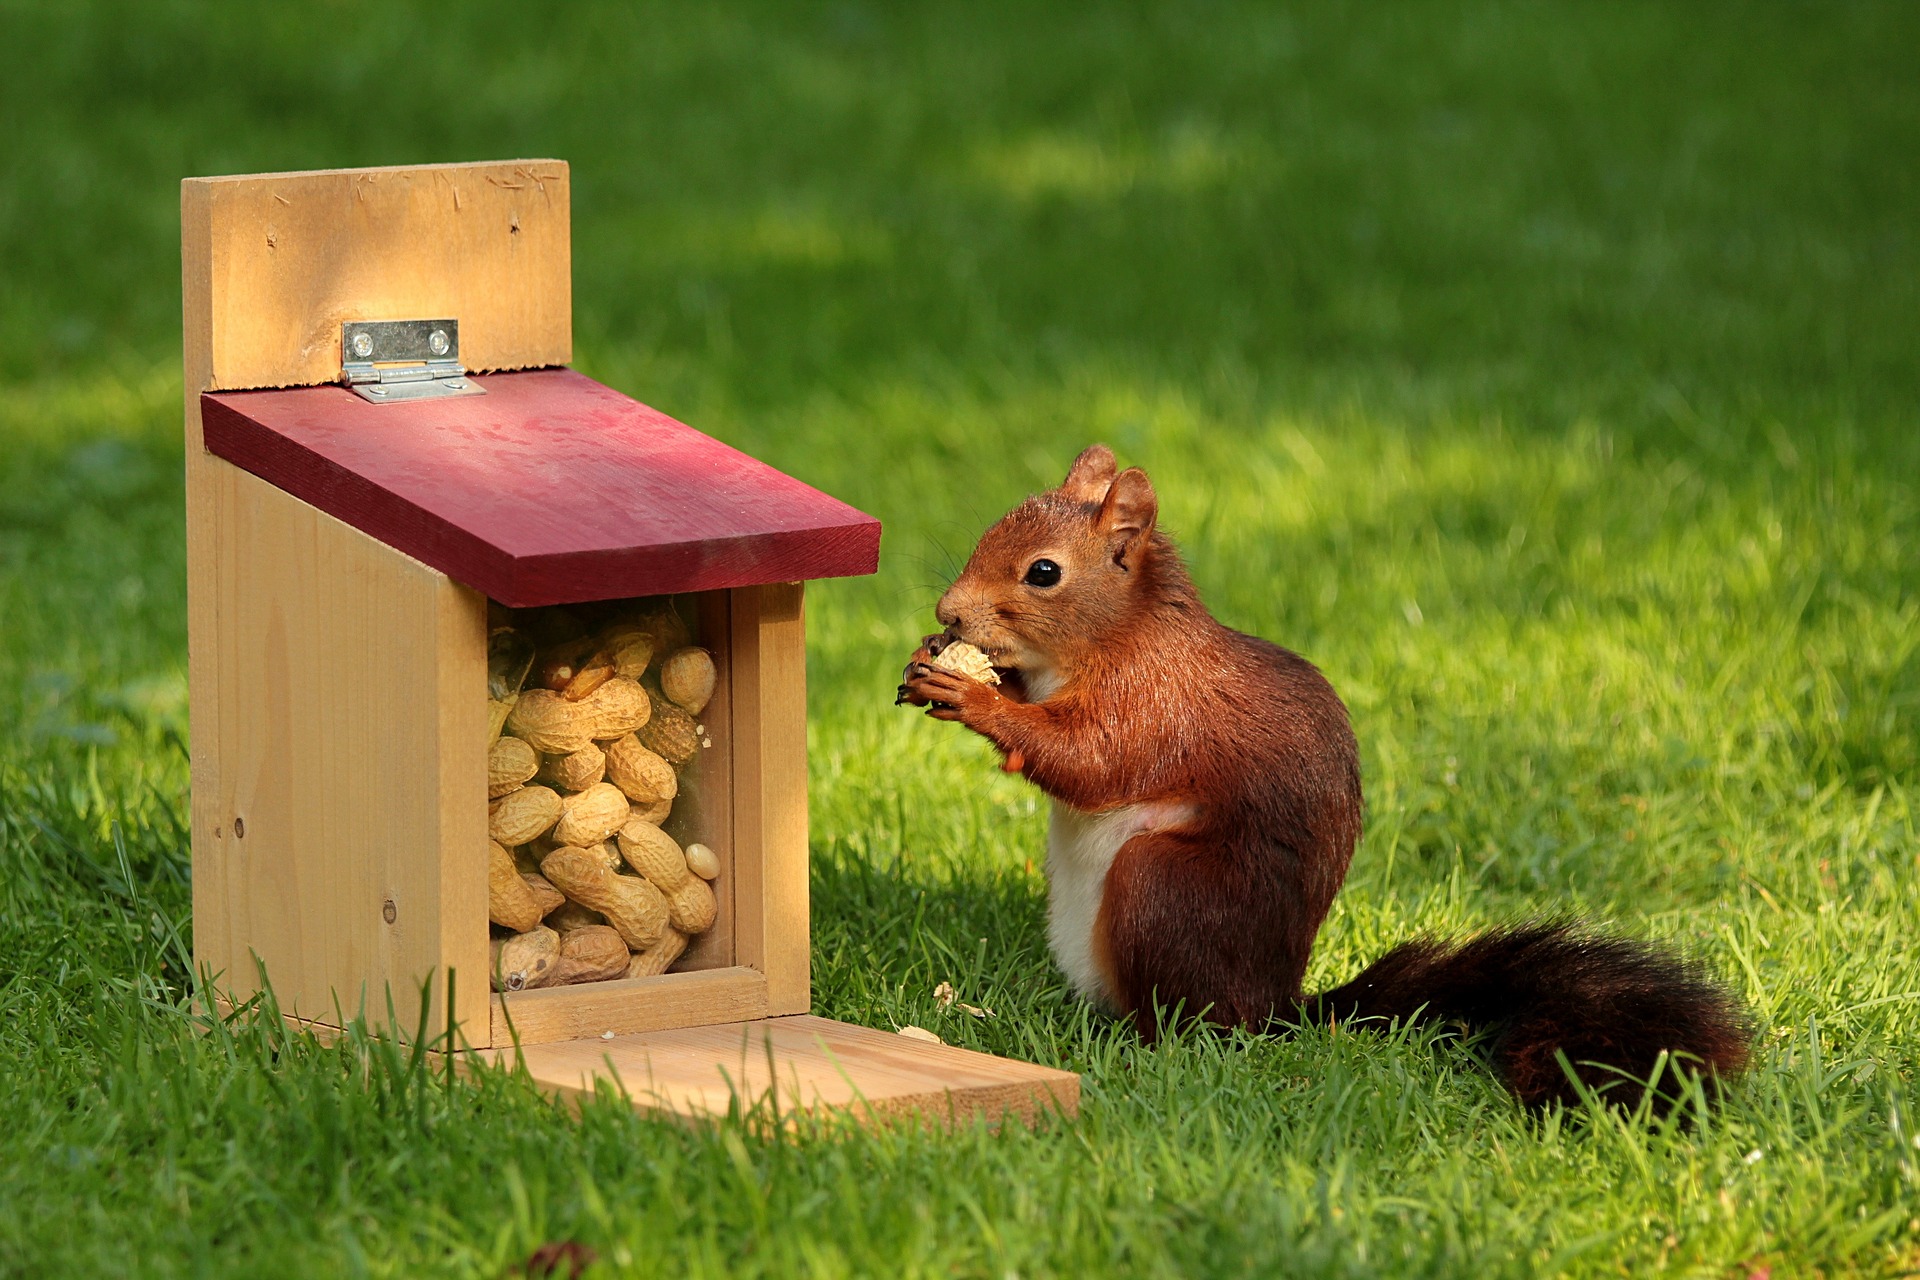 https://pixabay.com/en/animal-squirrel-sciurus-bird-meal-927904/